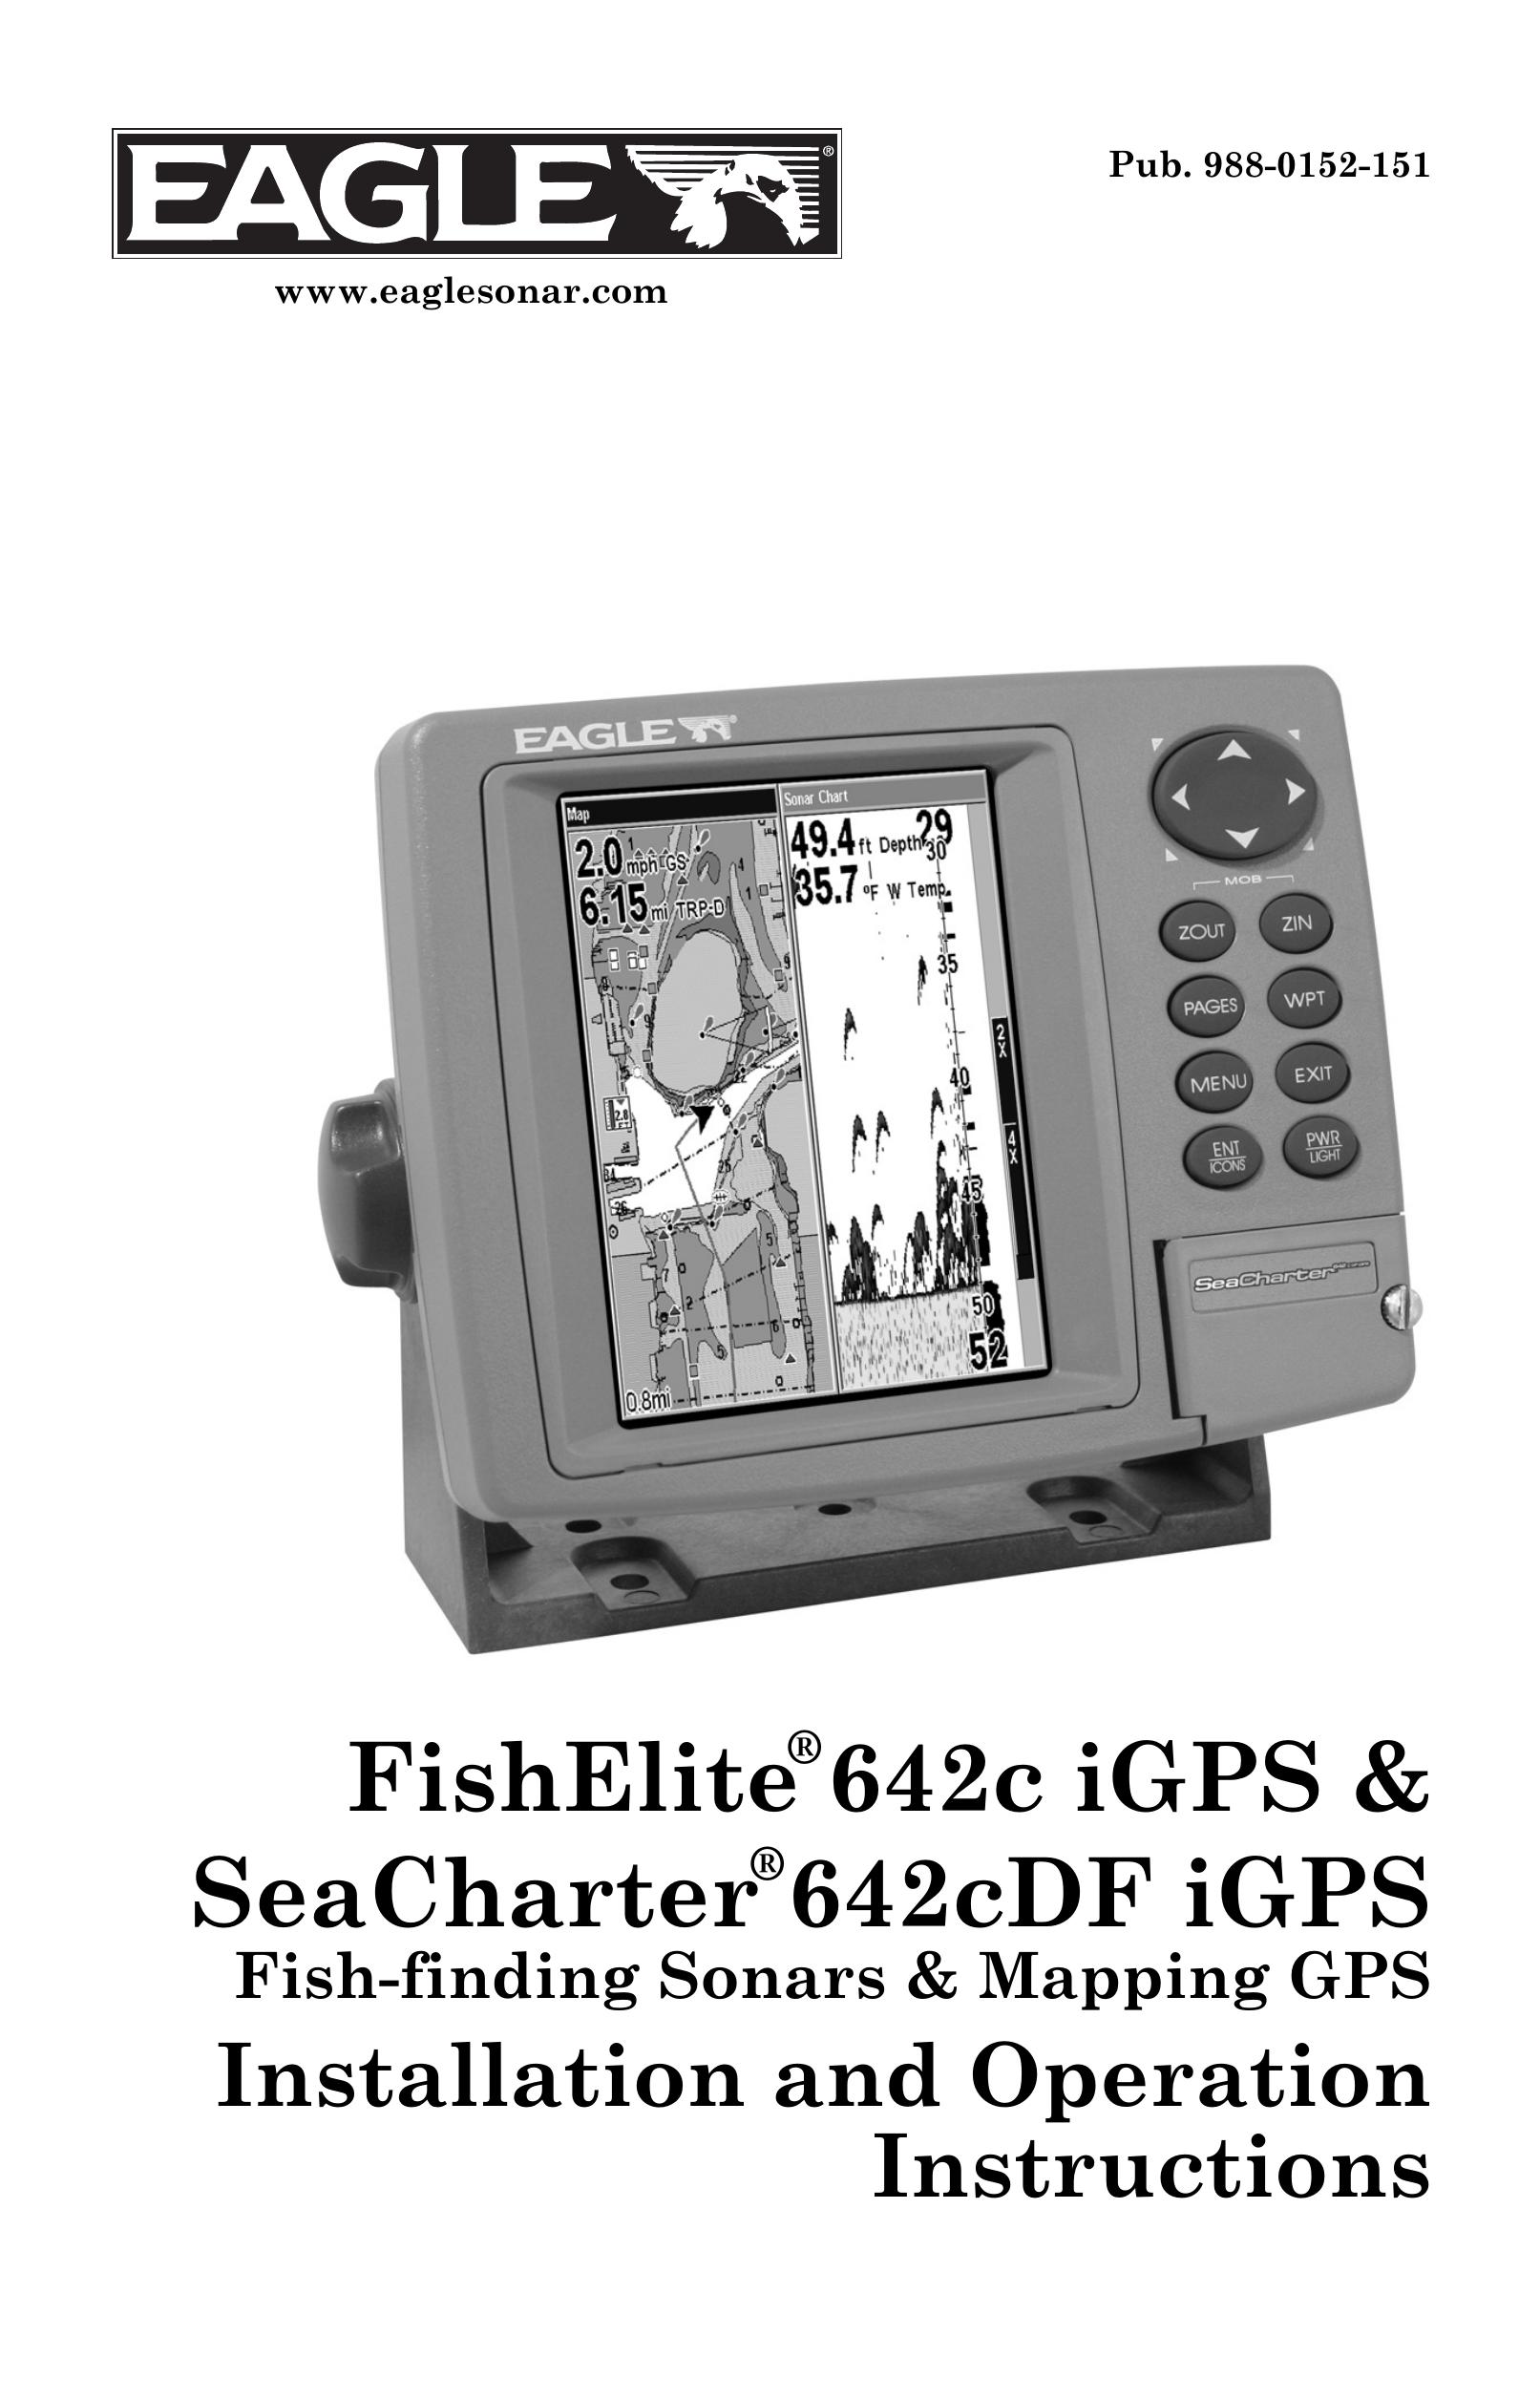 Eagle Electronics 642cDF Fish Finder User Manual